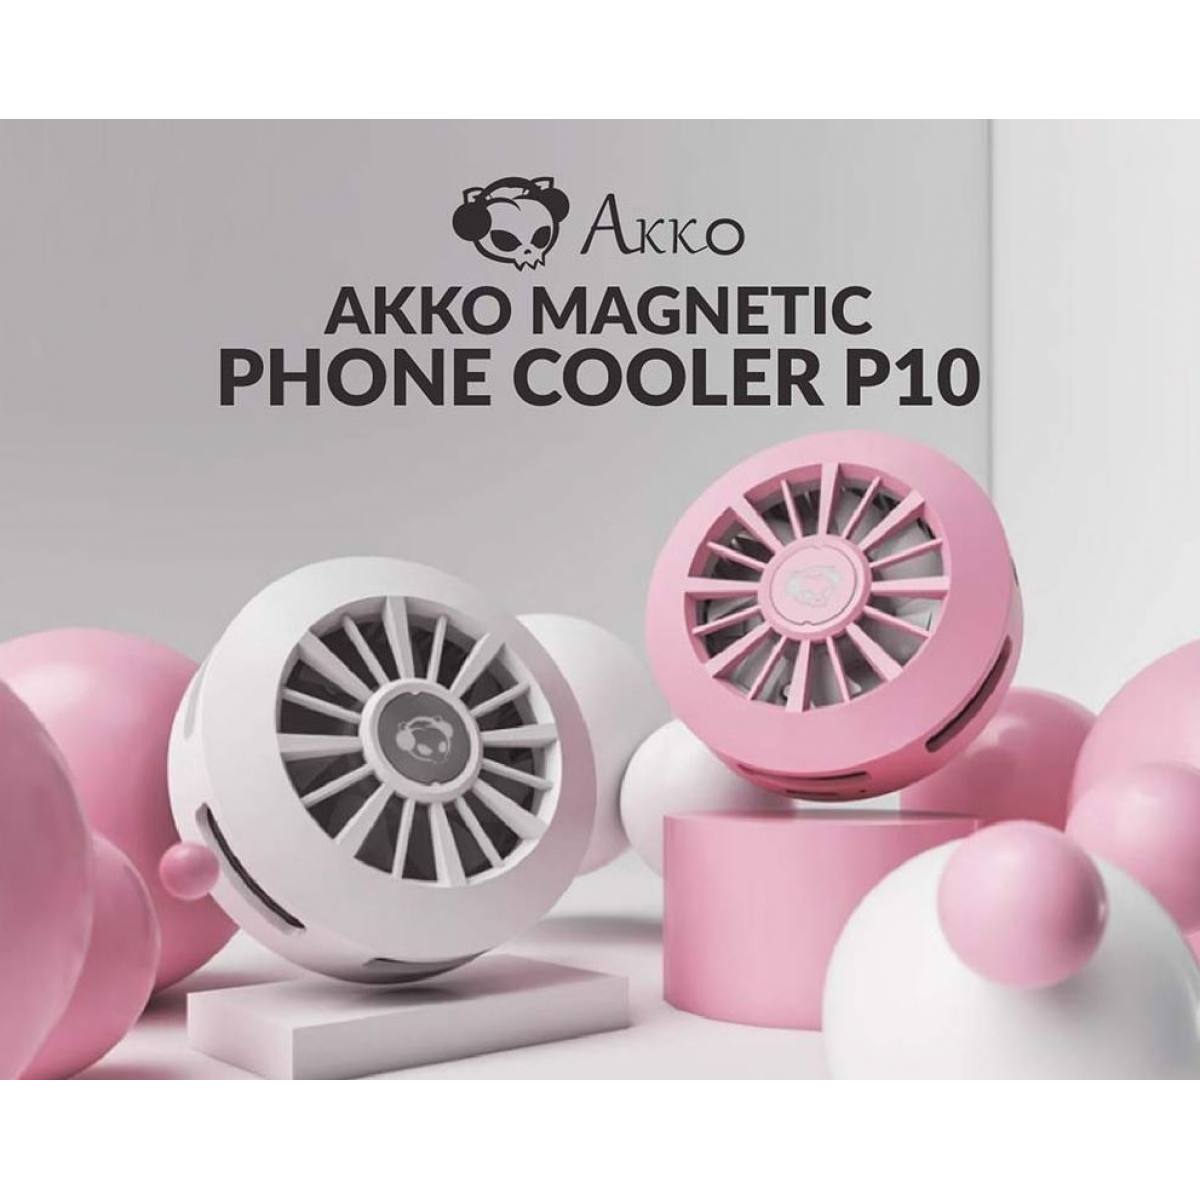 Quạt tản nhiệt AKKO Magnetic Phone Cooler P10